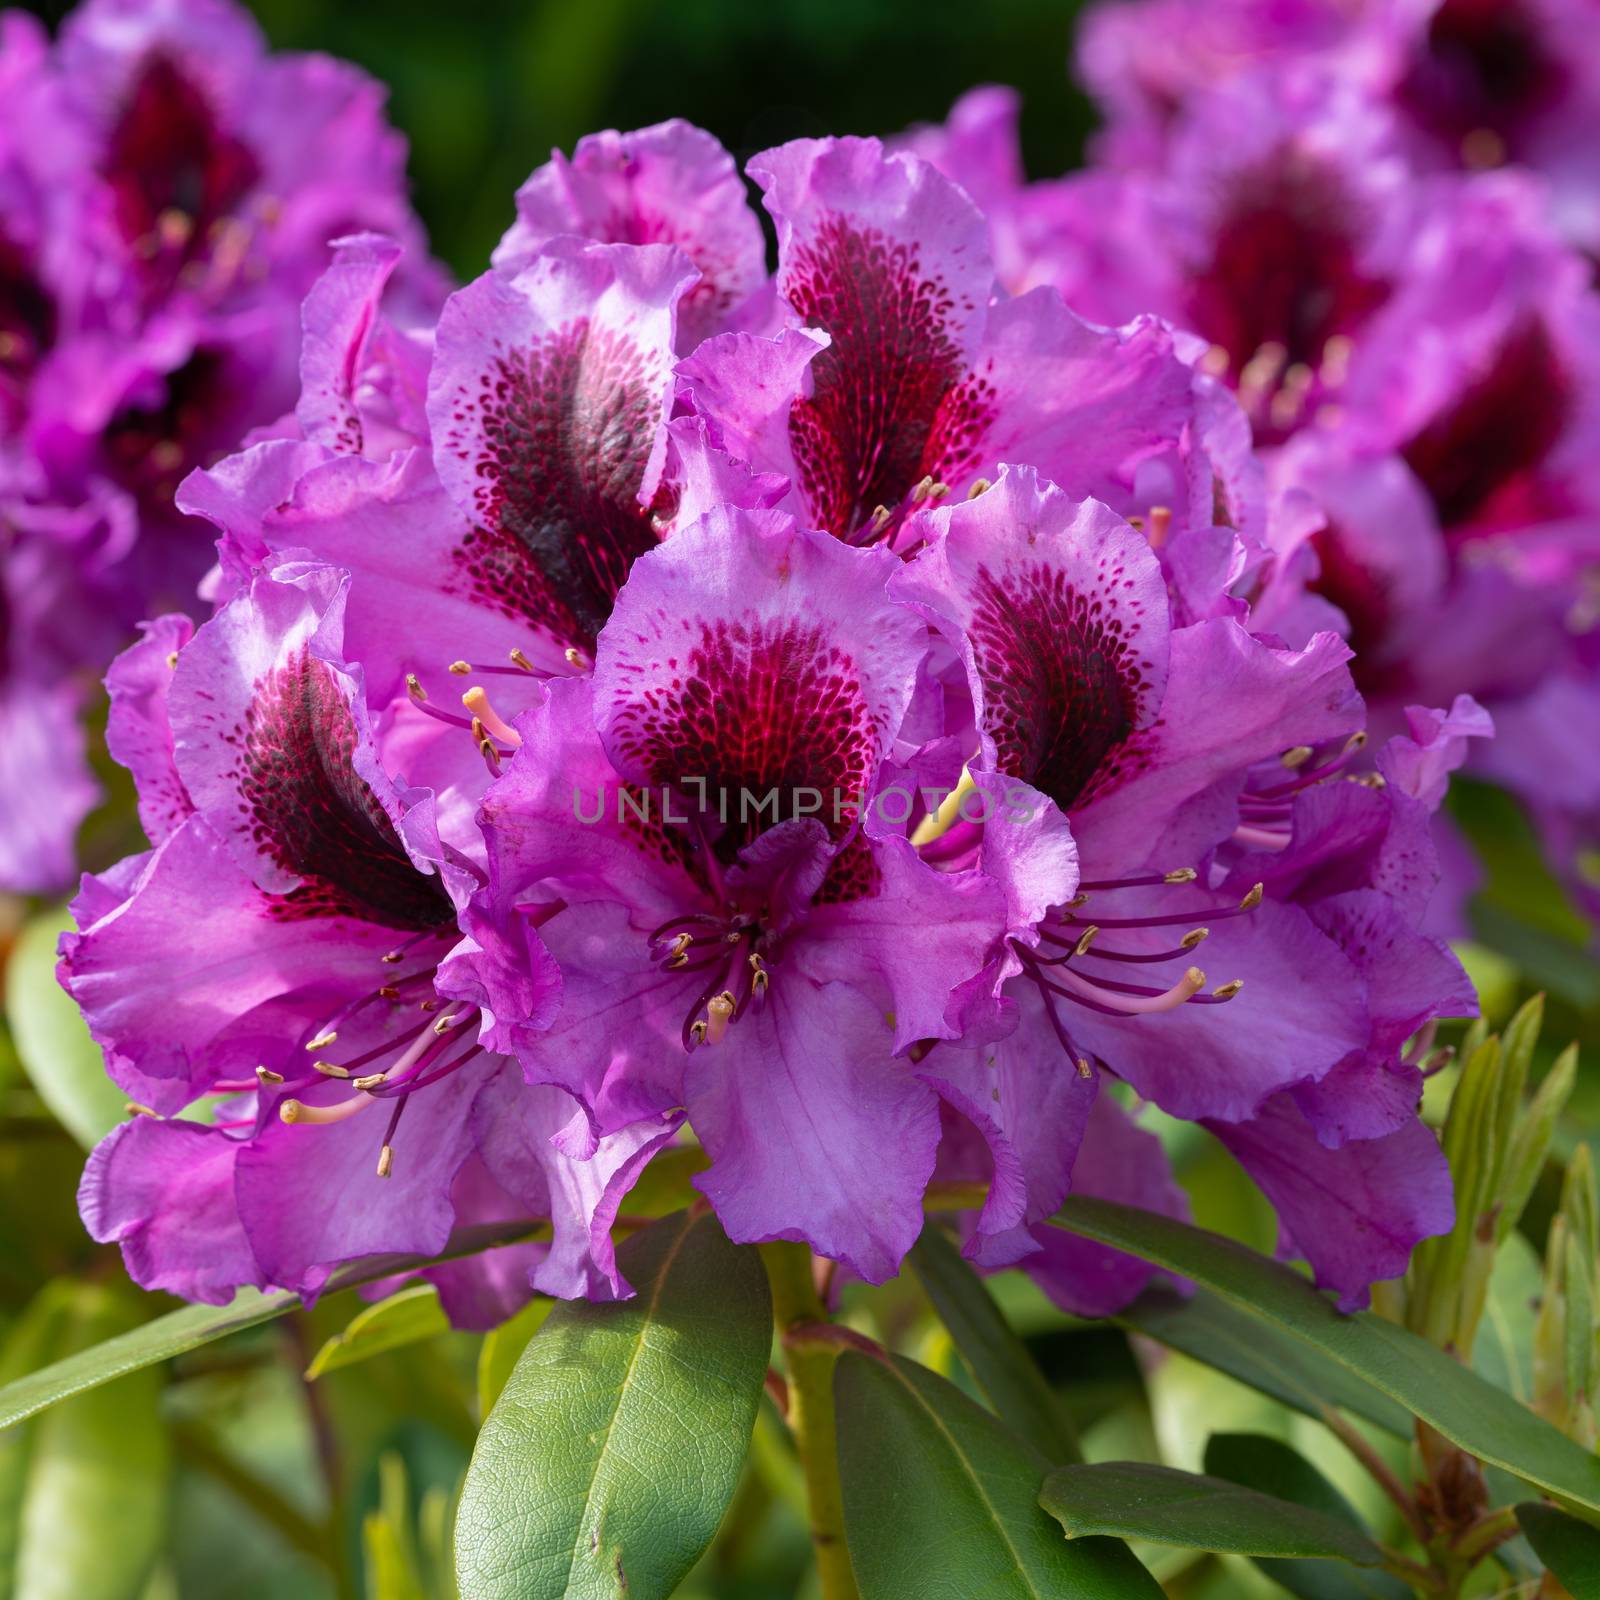 Rhododendron Hybrid Orakel, Rhododendron hybride by alfotokunst